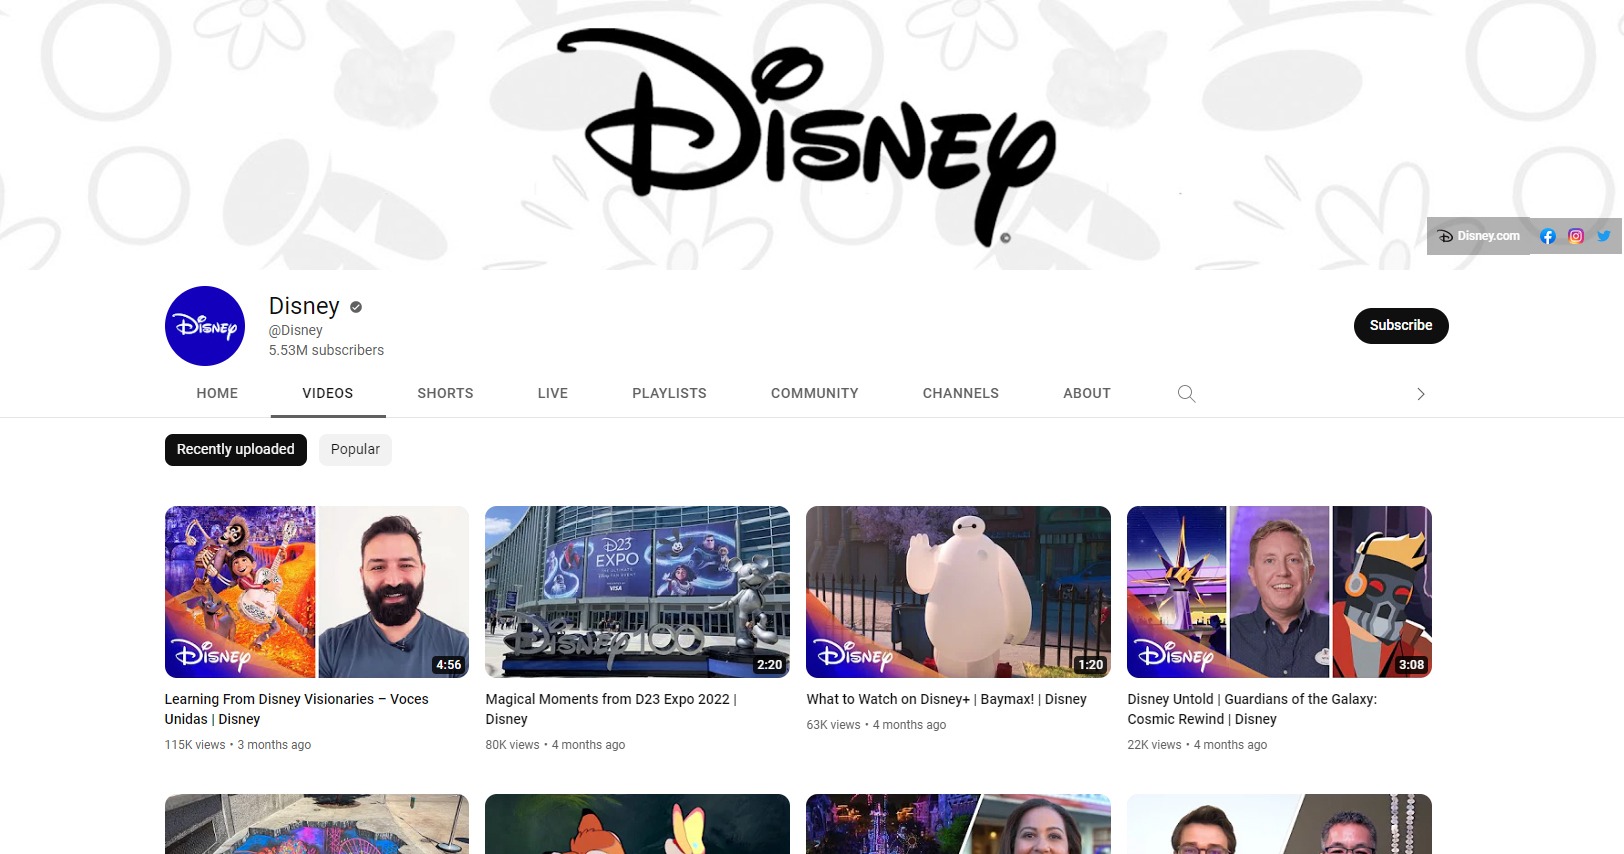 Disney Social Media - The YouTube Channel